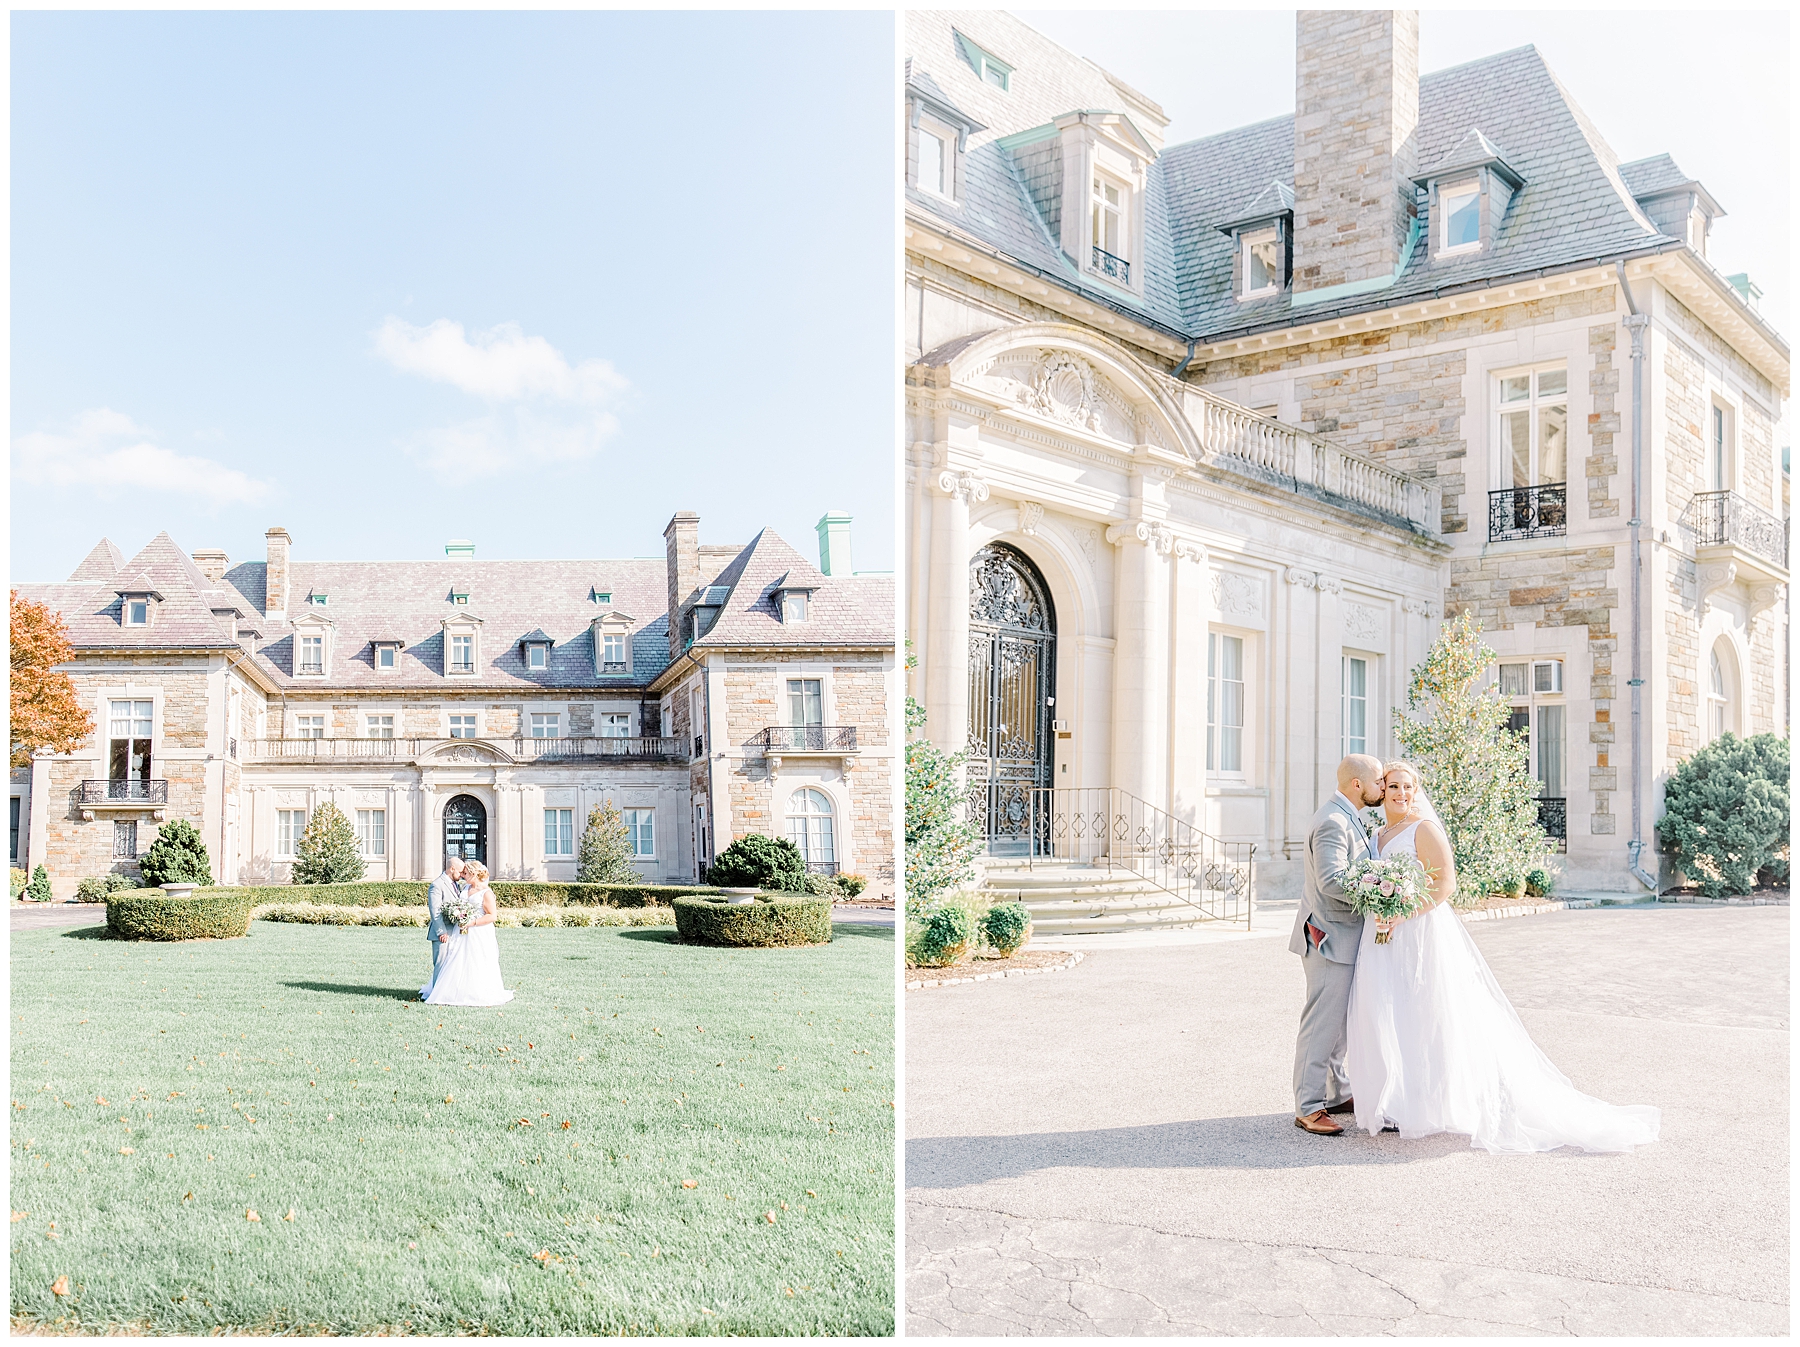 Newport wedding Photographer captures newlyweds in front of Aldrich Mansion